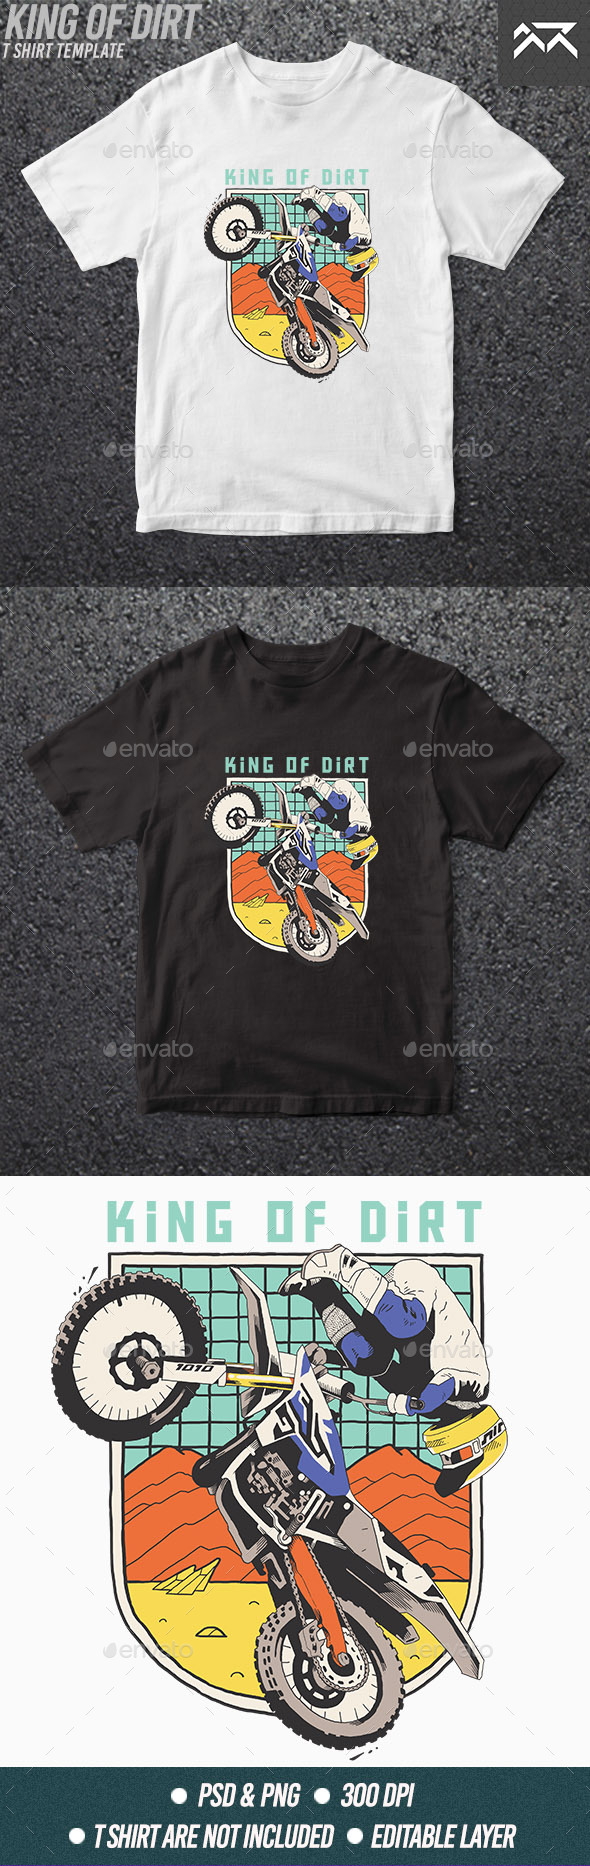 [DOWNLOAD]King of Dirt T-shirt Design Template